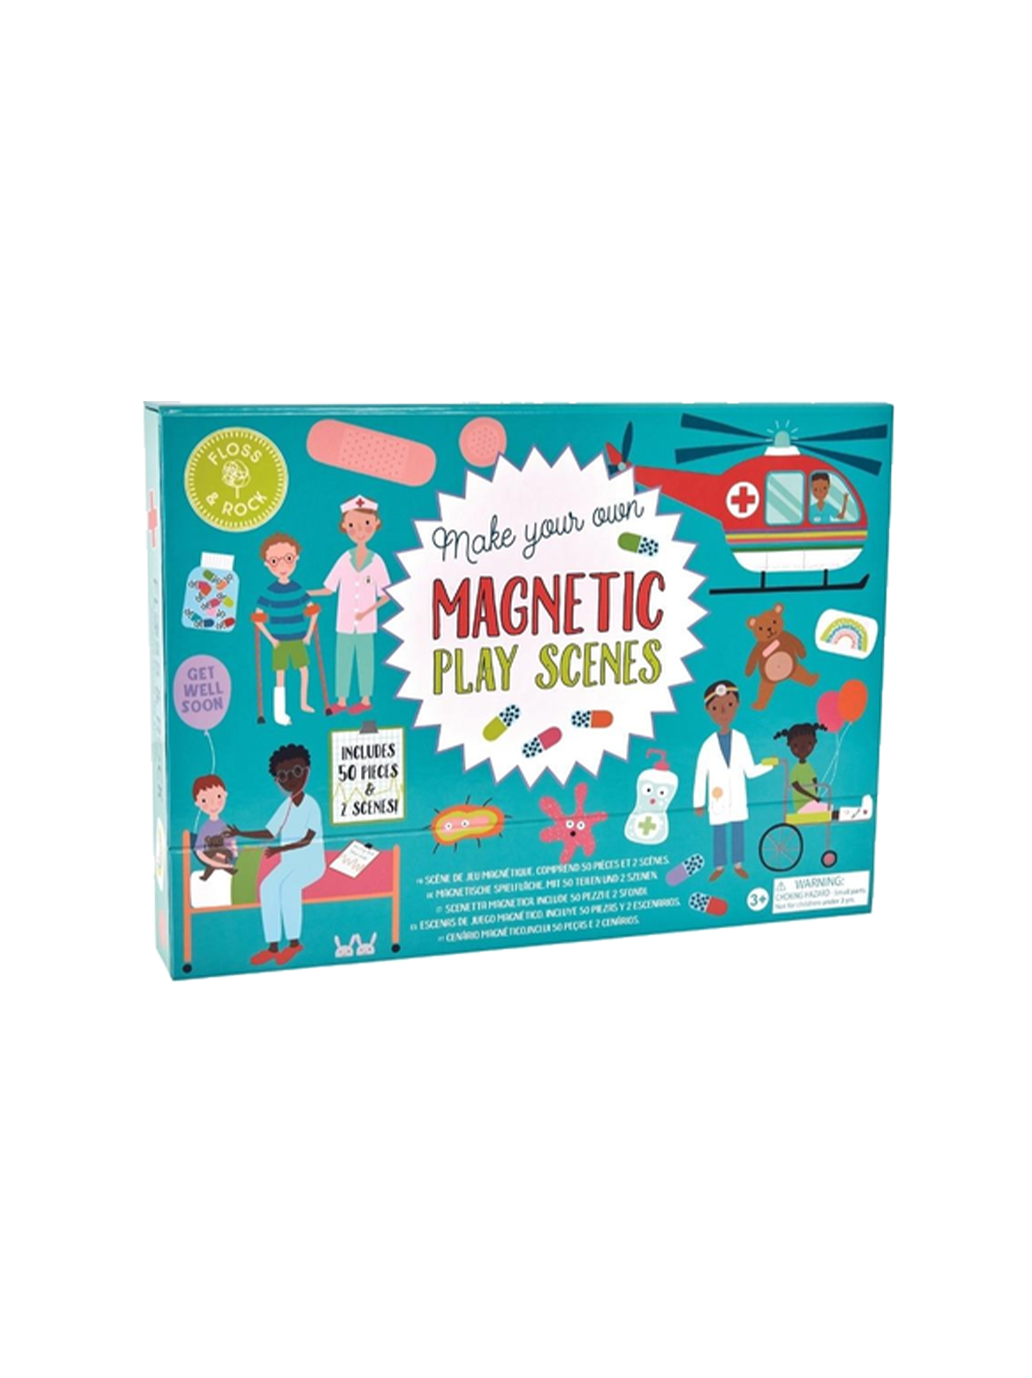 Magnetic play scenes